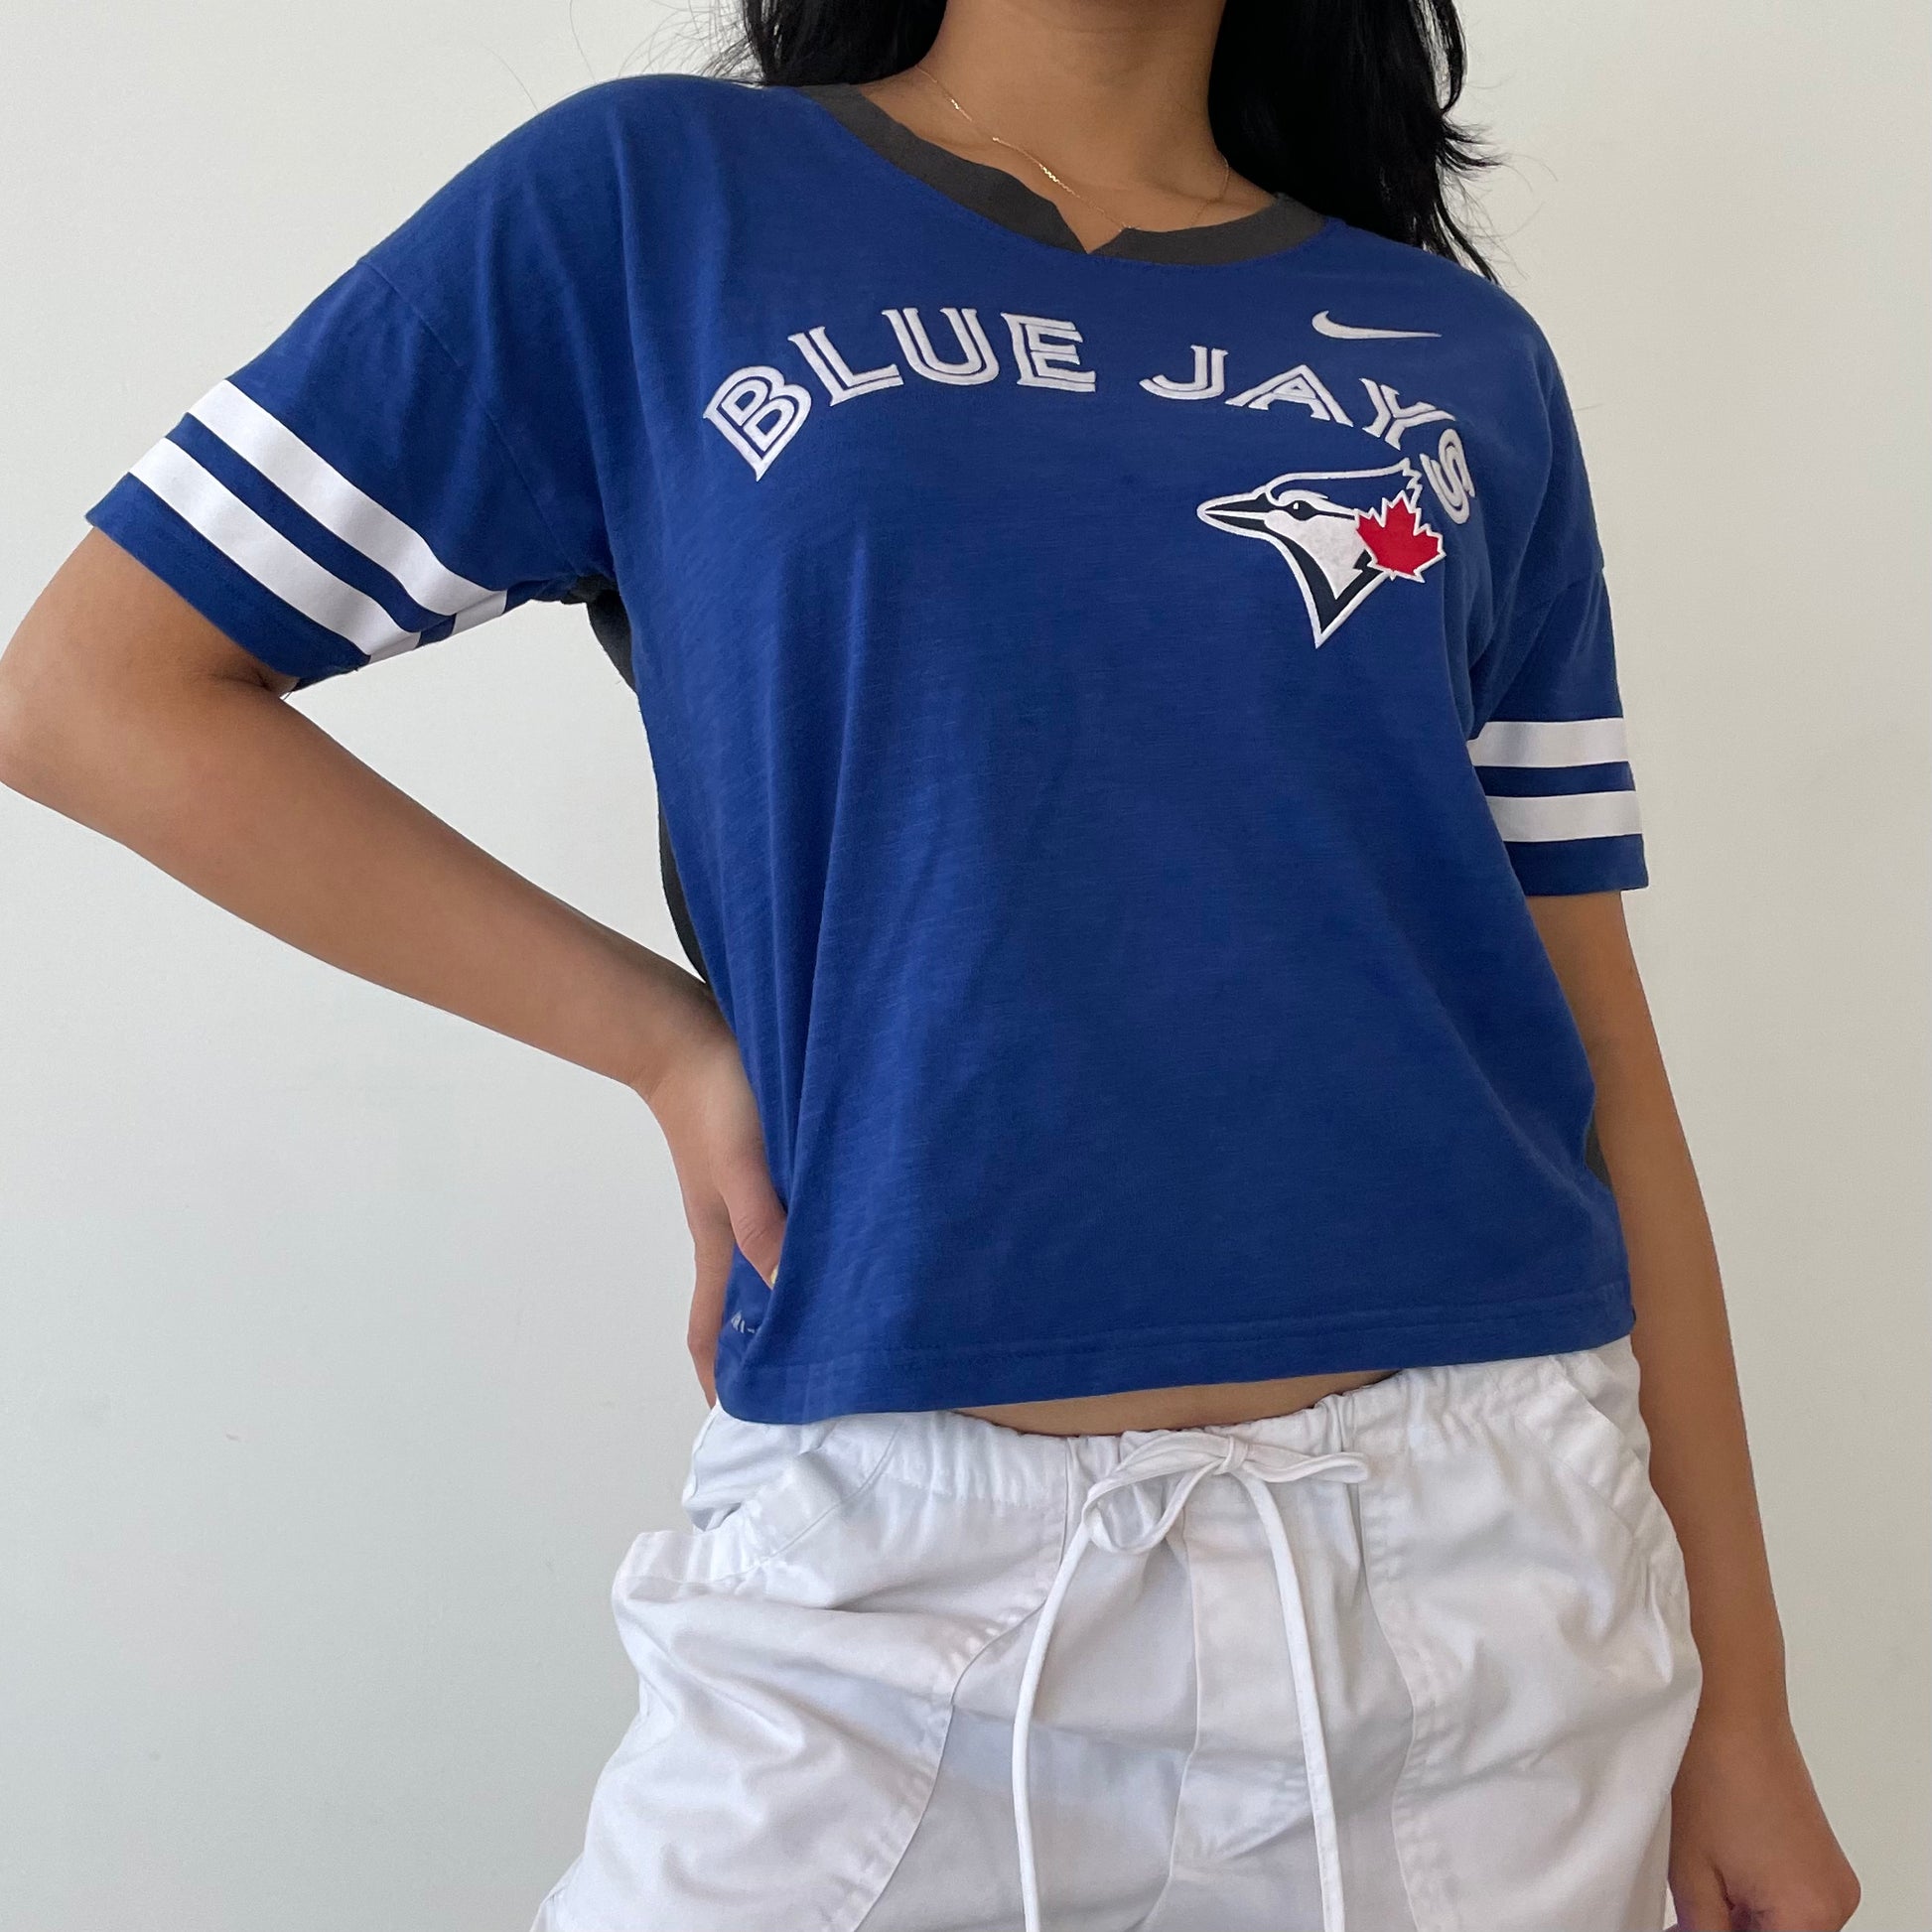 blue jays jersey womens